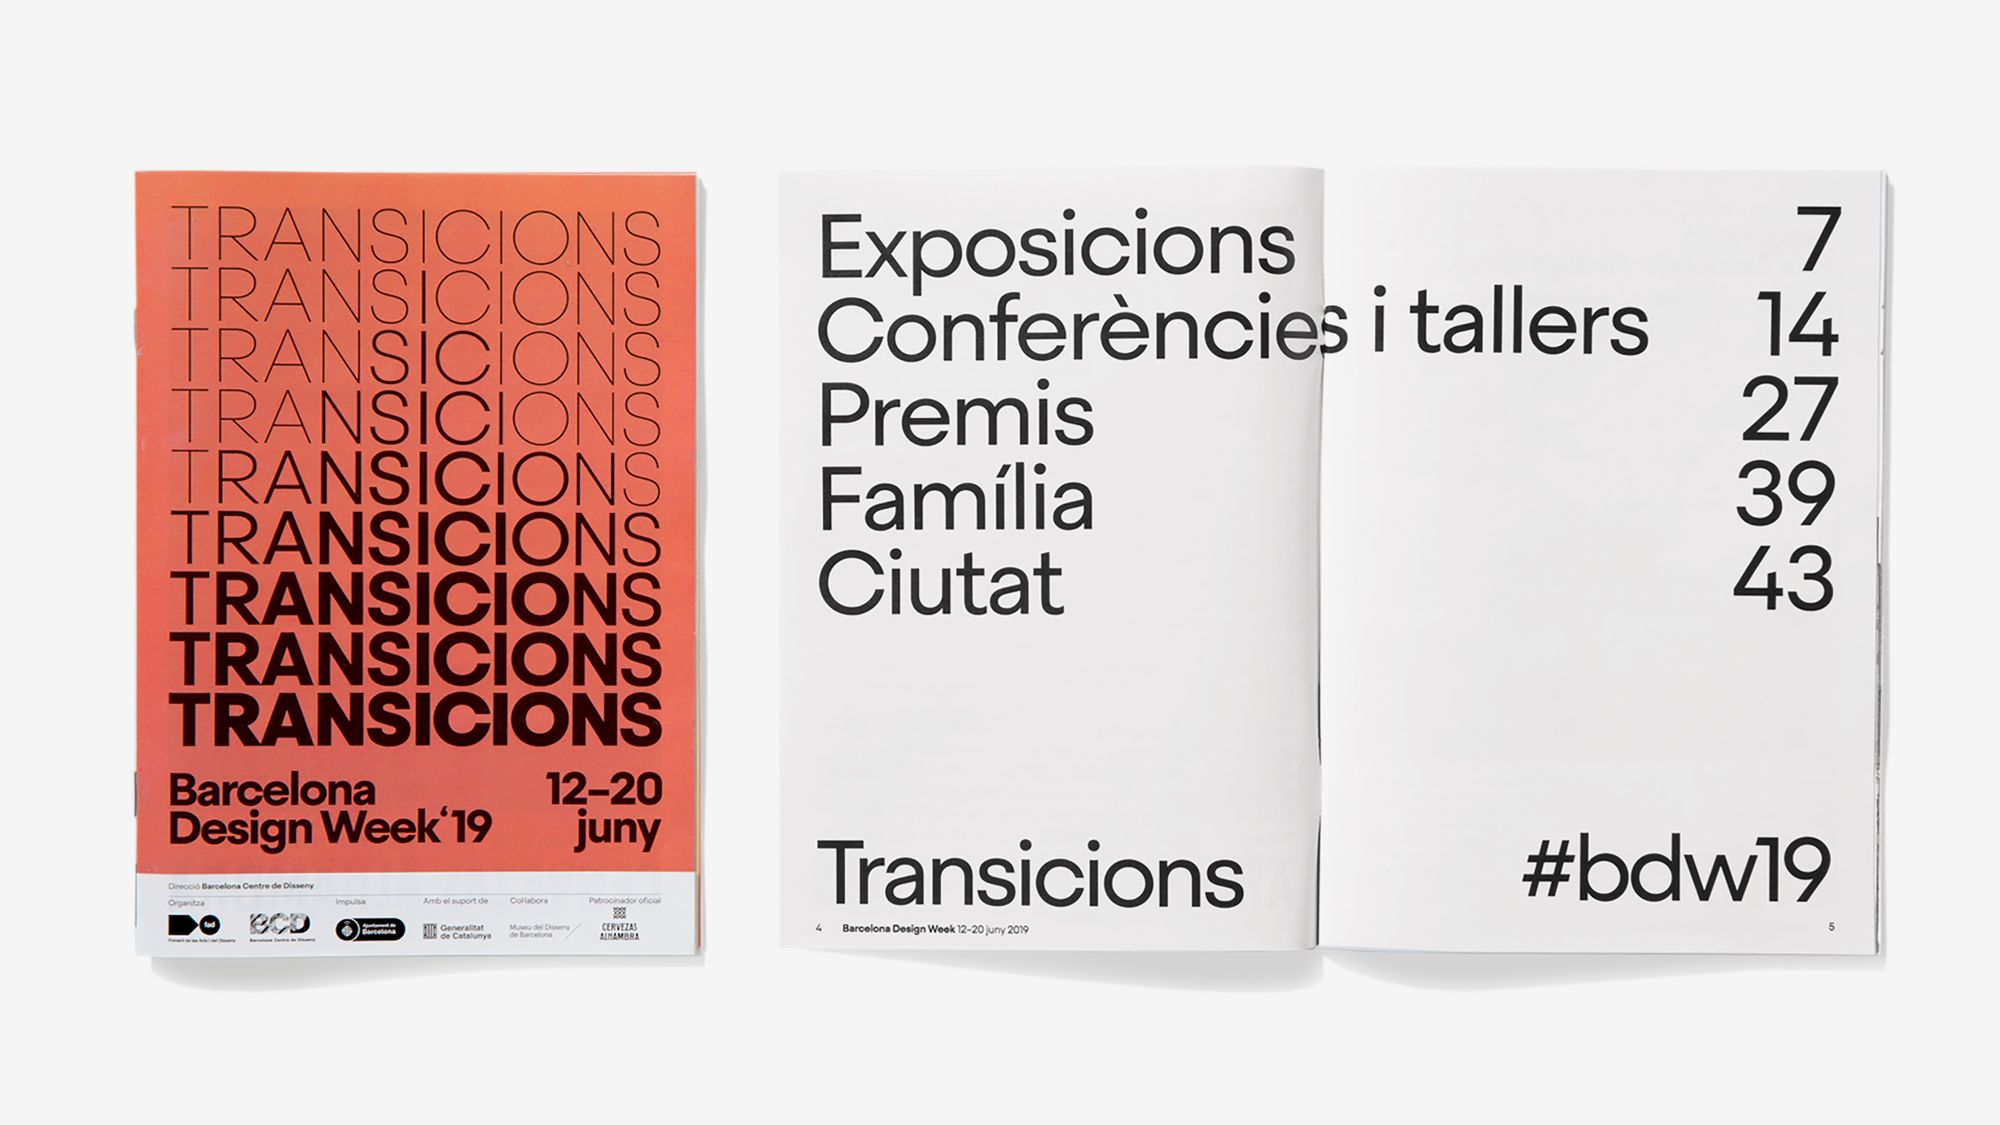 Barcelona Design Week 2019 program